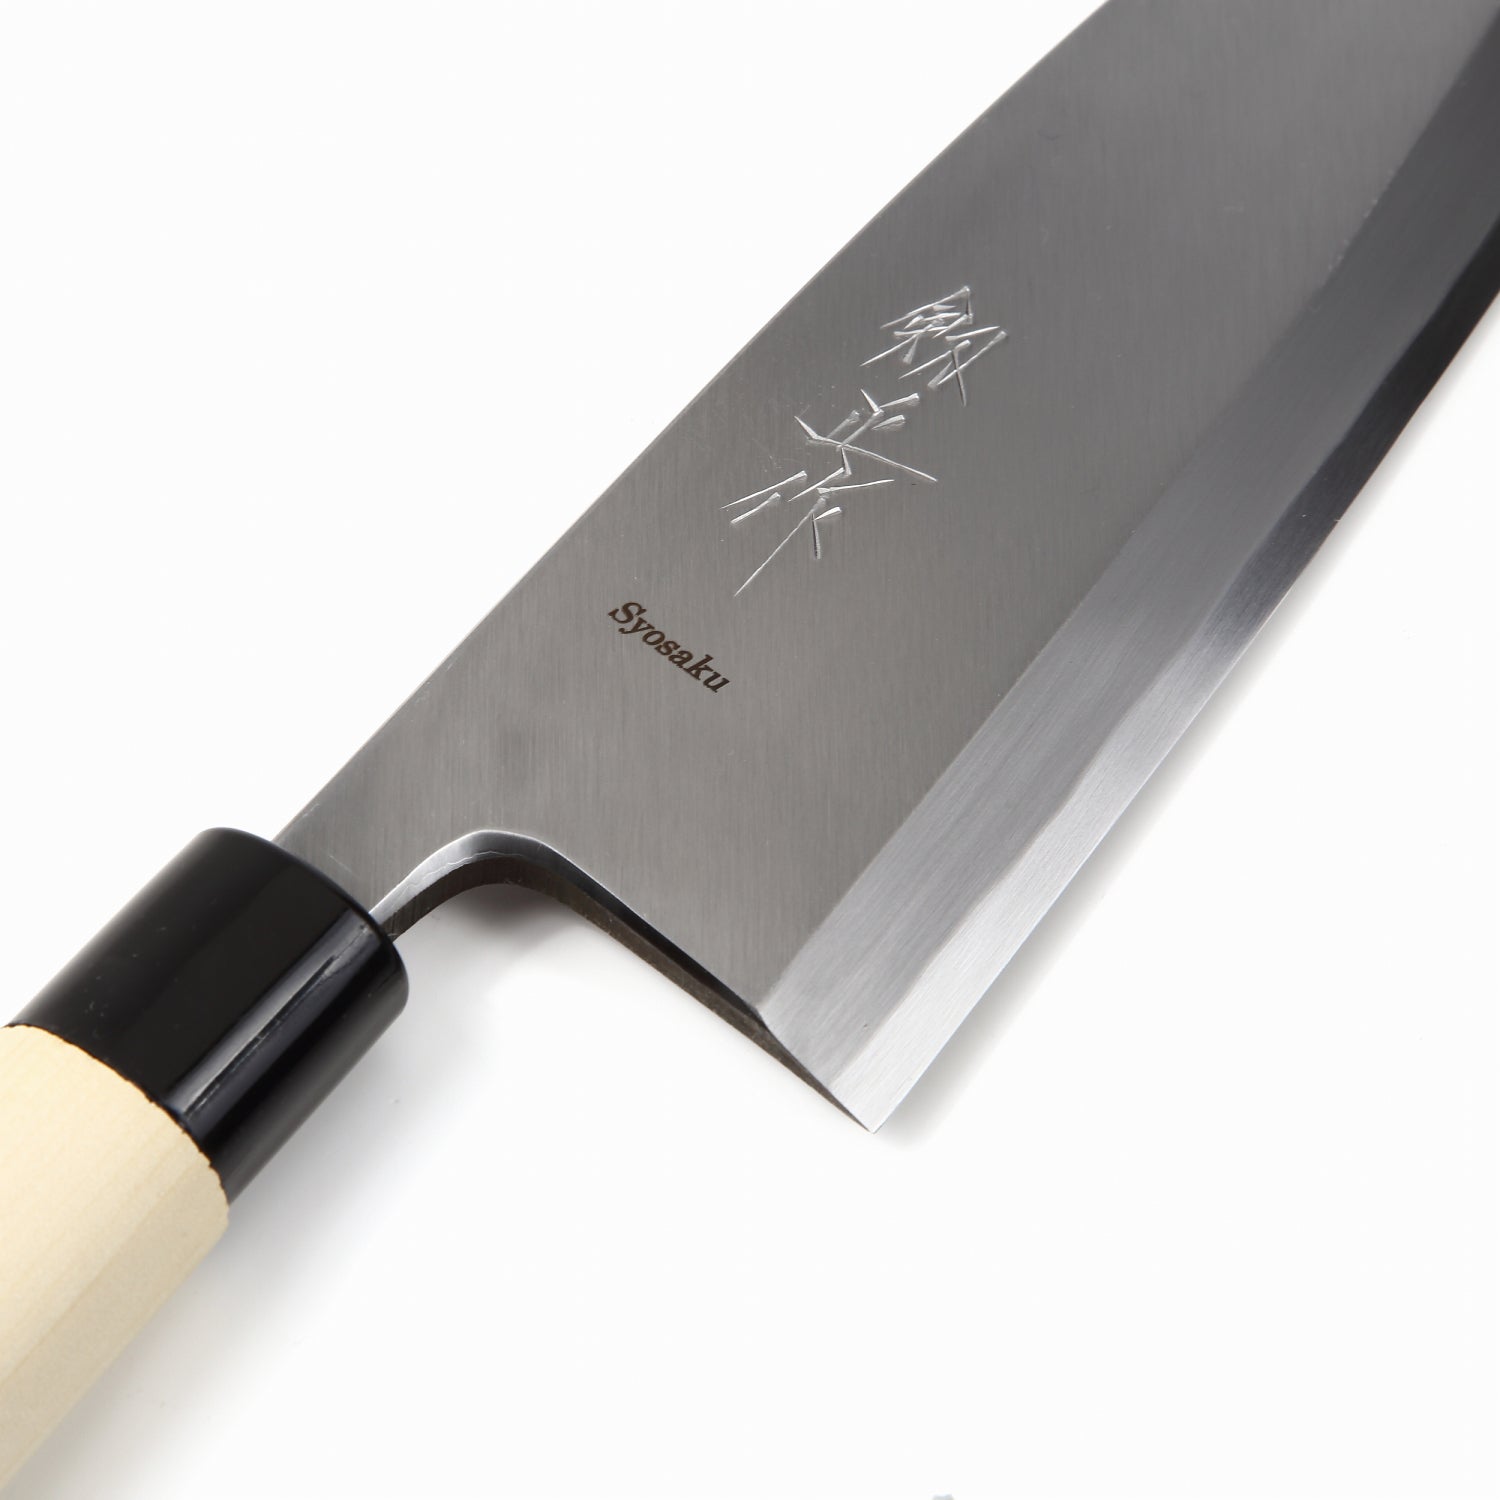 Japanese chef knife Deba